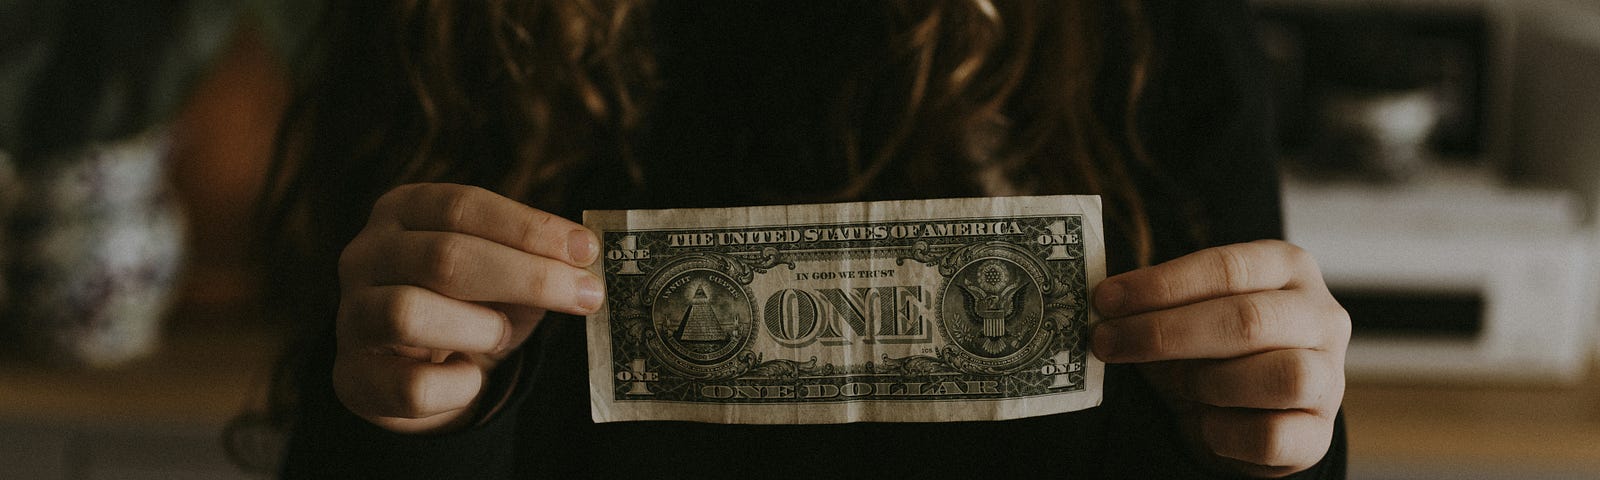 woman with single dollar